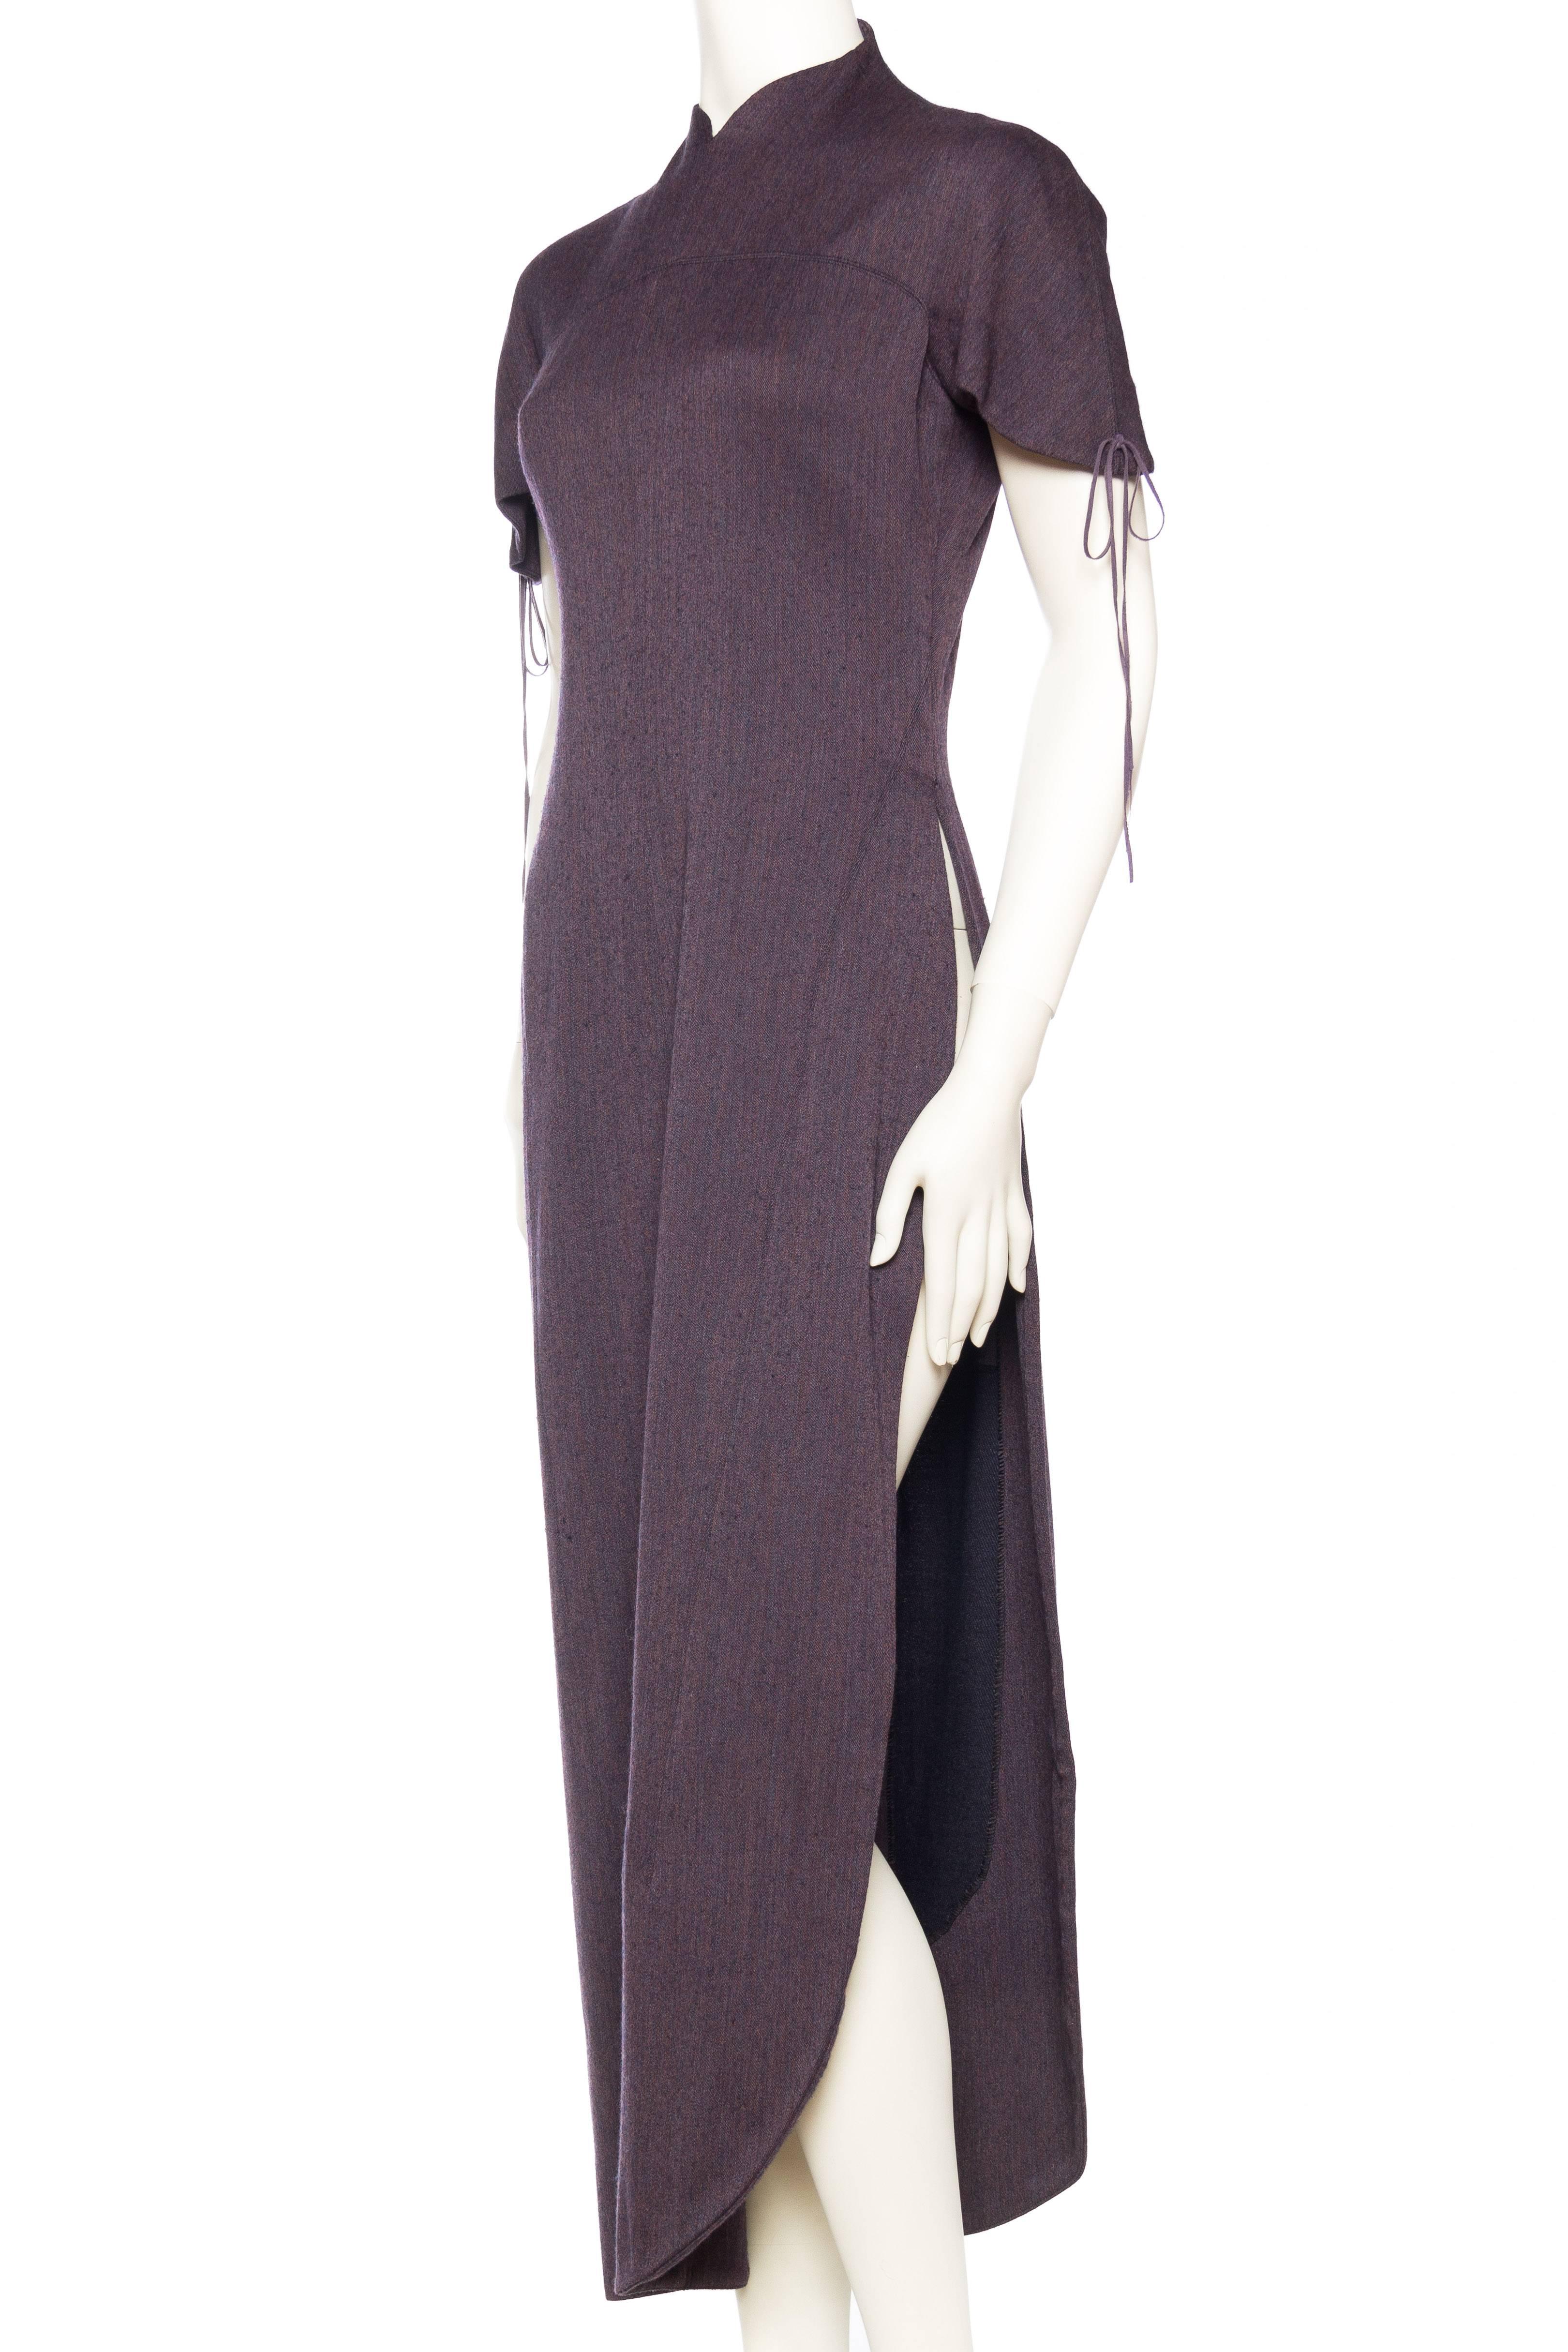 Women's Minimalist Dress with High Slit, 1980s 